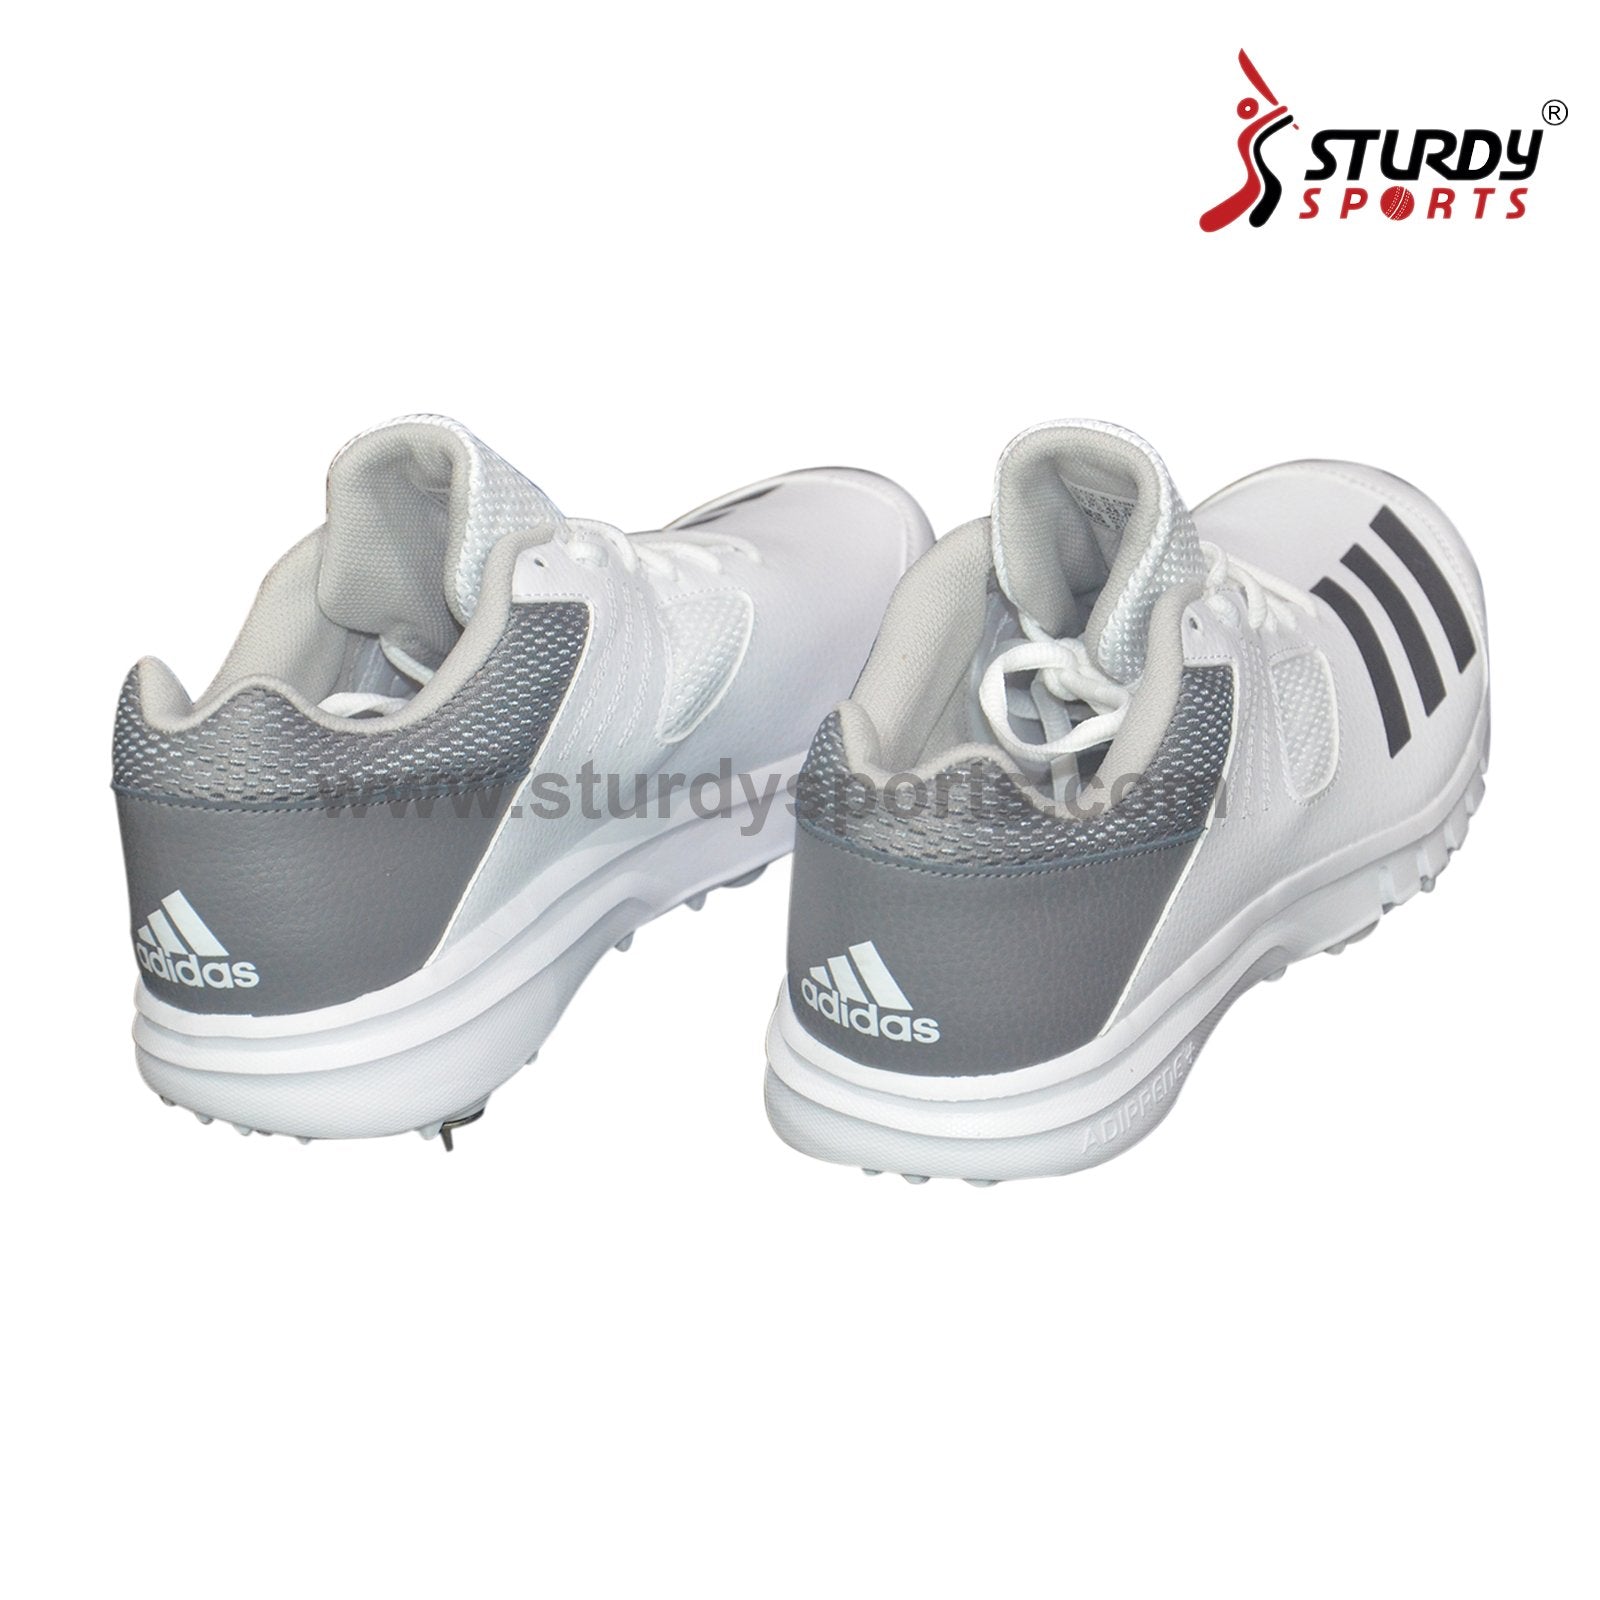 Adidas Howzatt Steel Spikes Cricket Shoes